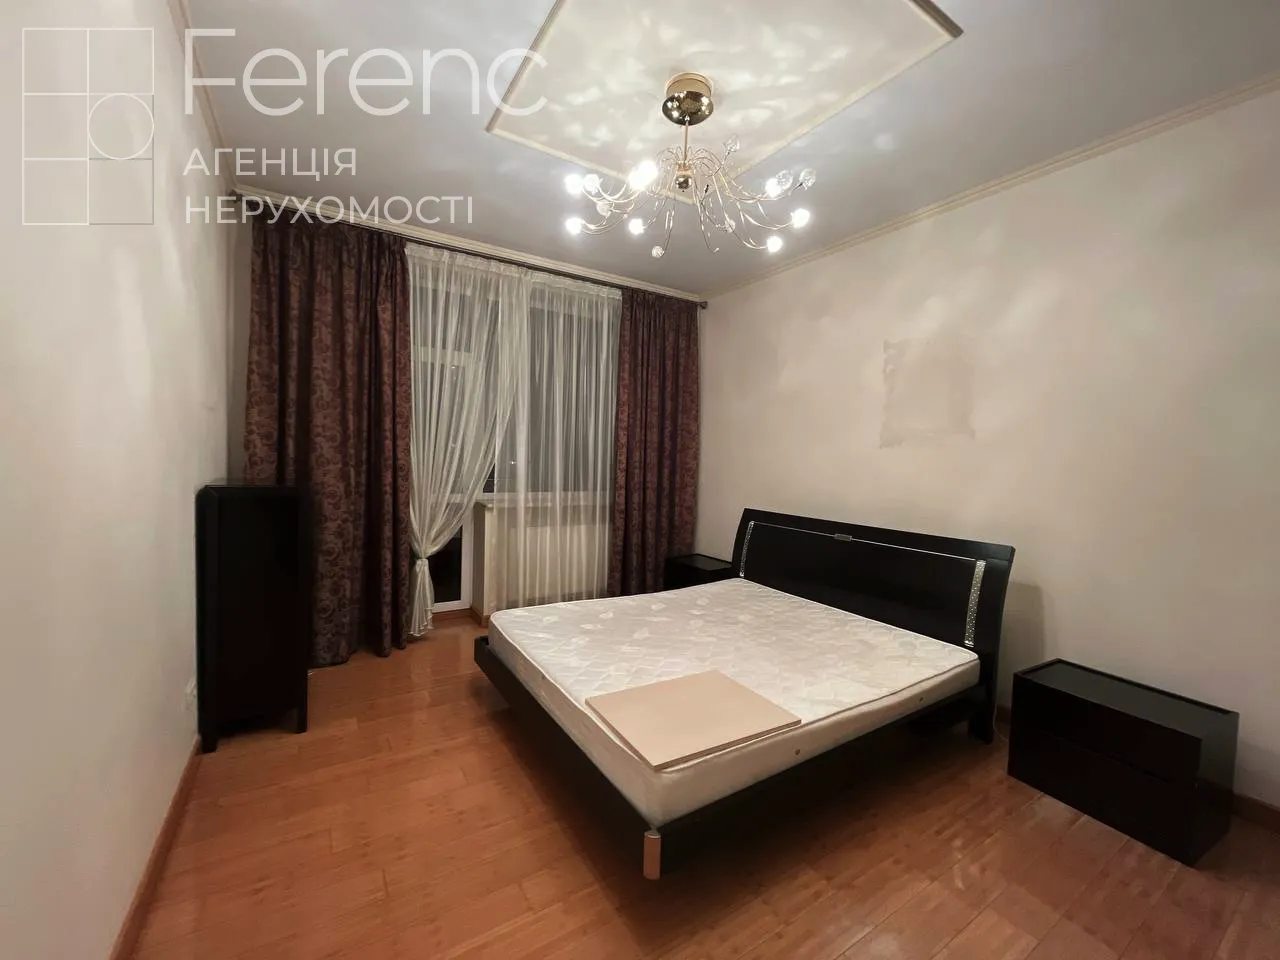 Оренда 3-х кімнатної квартири проспект Чорновола, 140 кв.м.